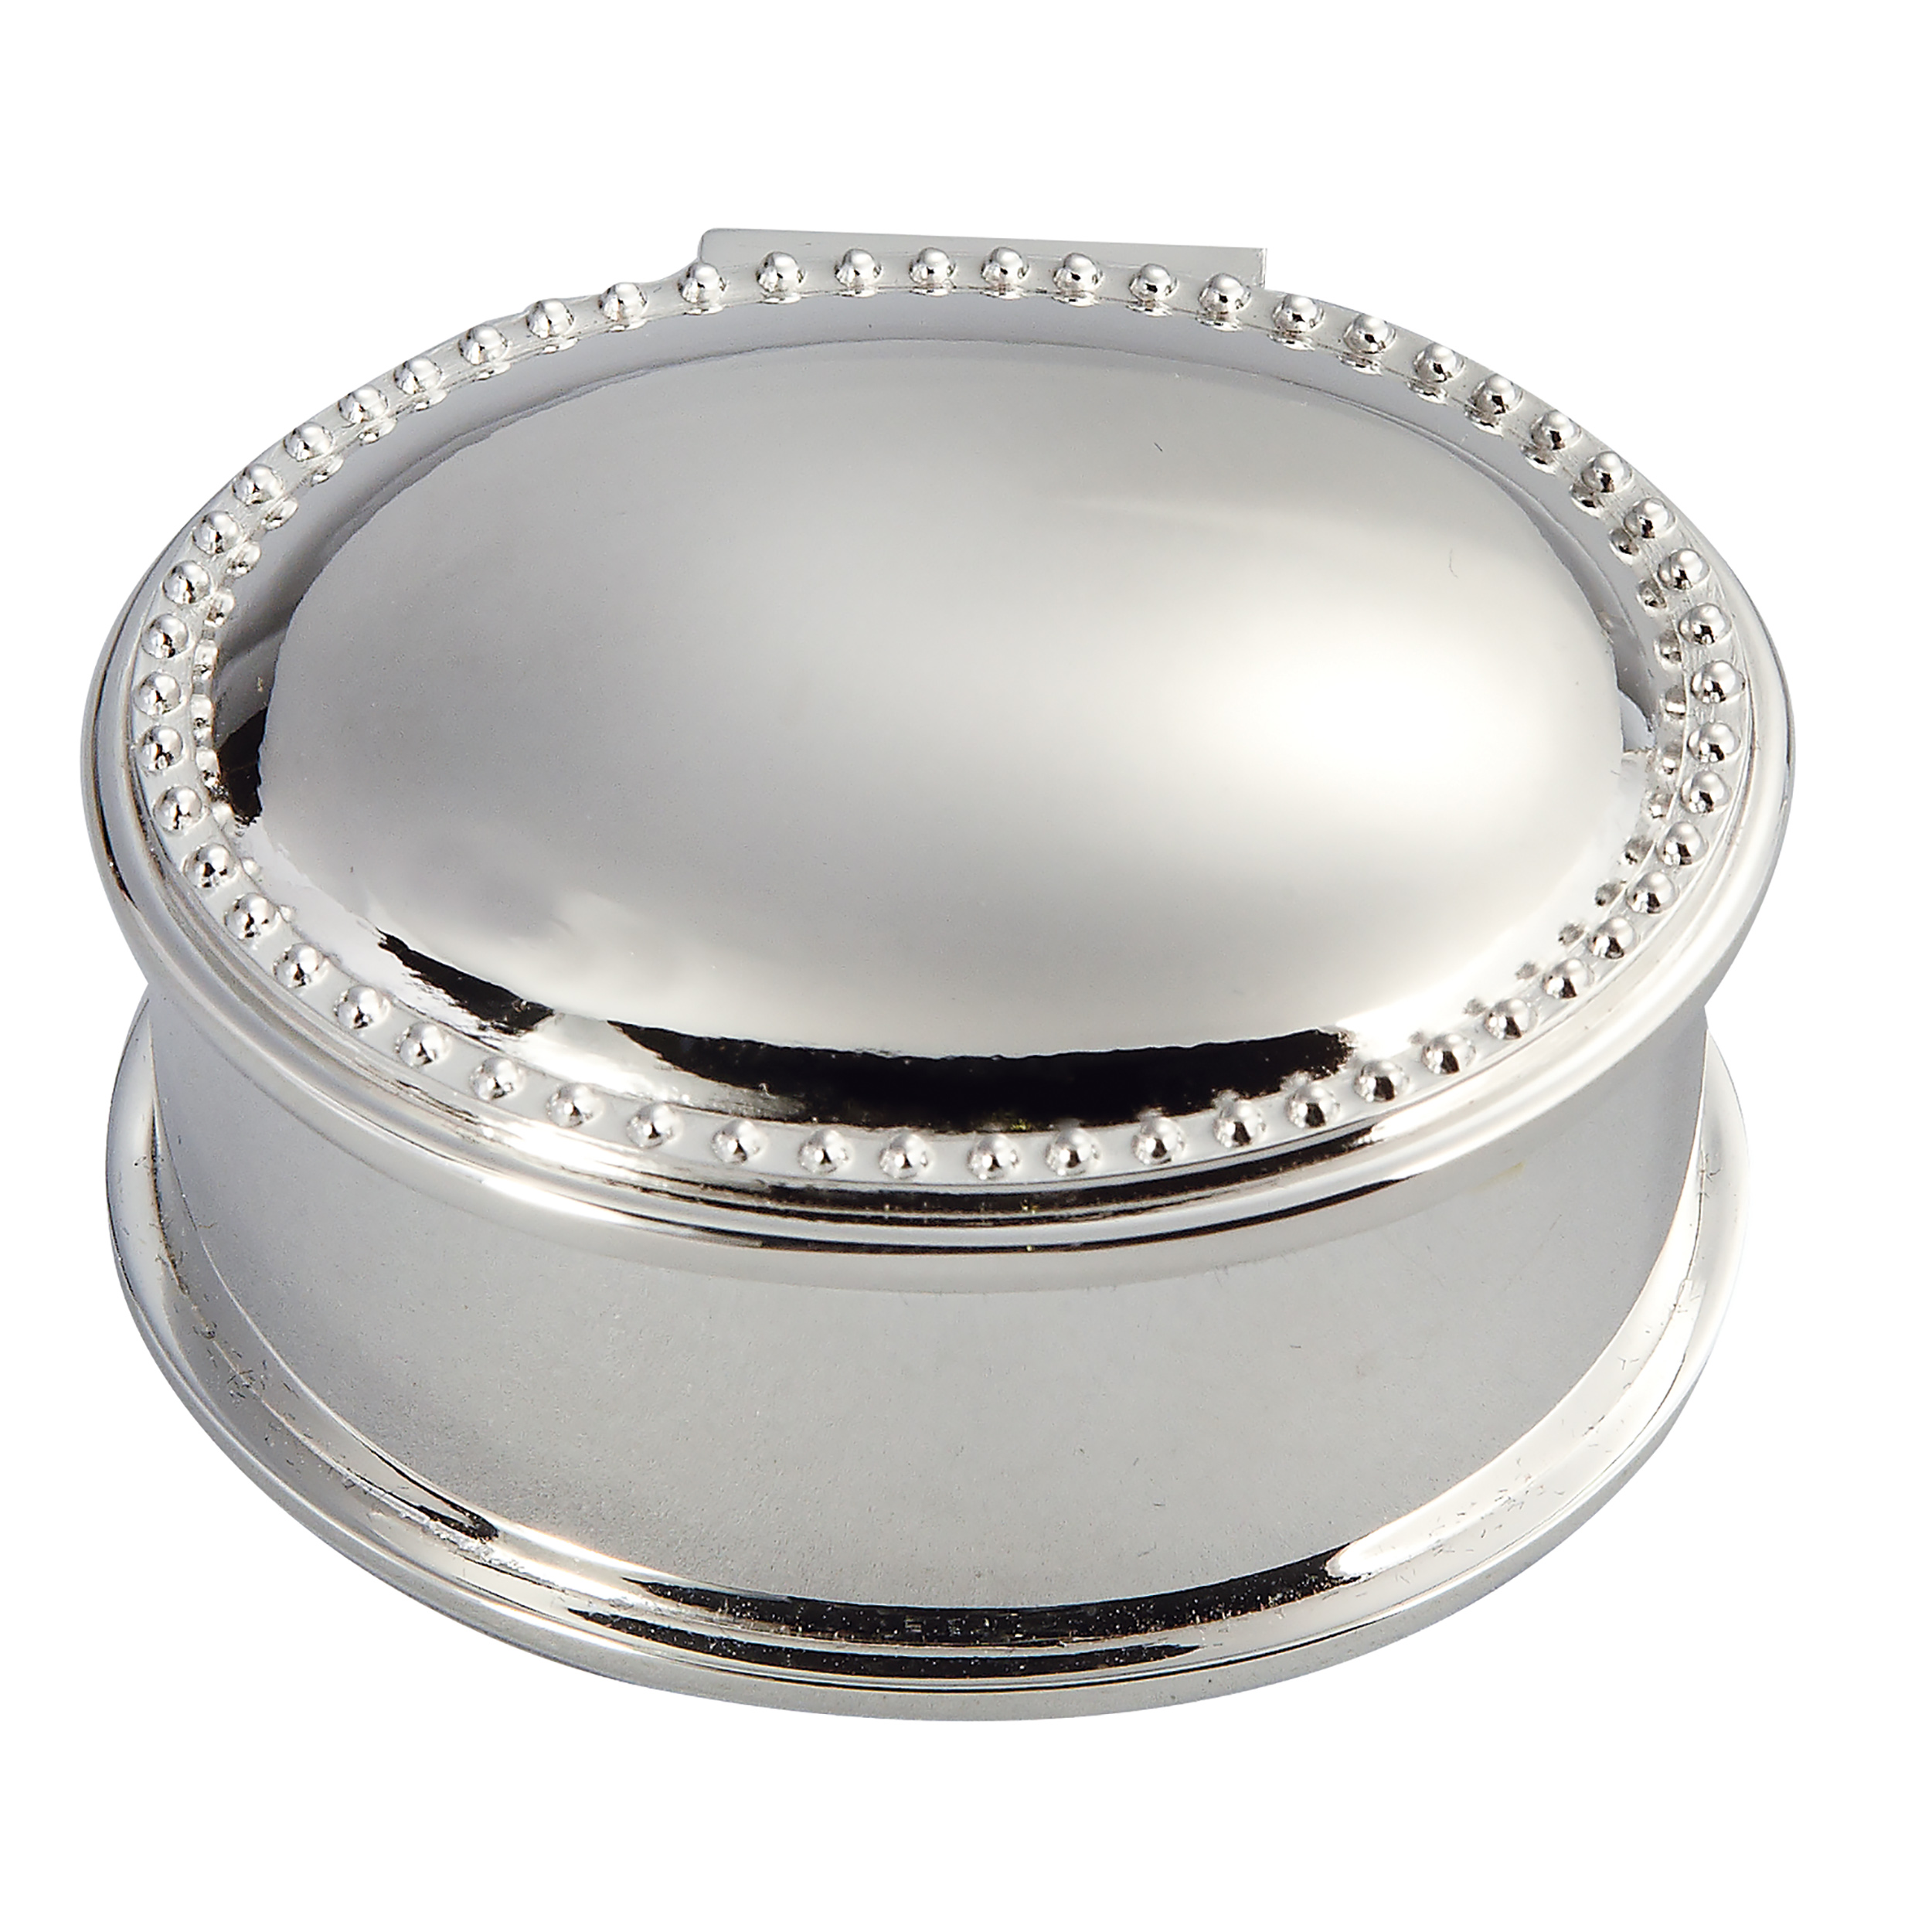 Oval jewelry box, 2.5" x 2" - Item # 6402